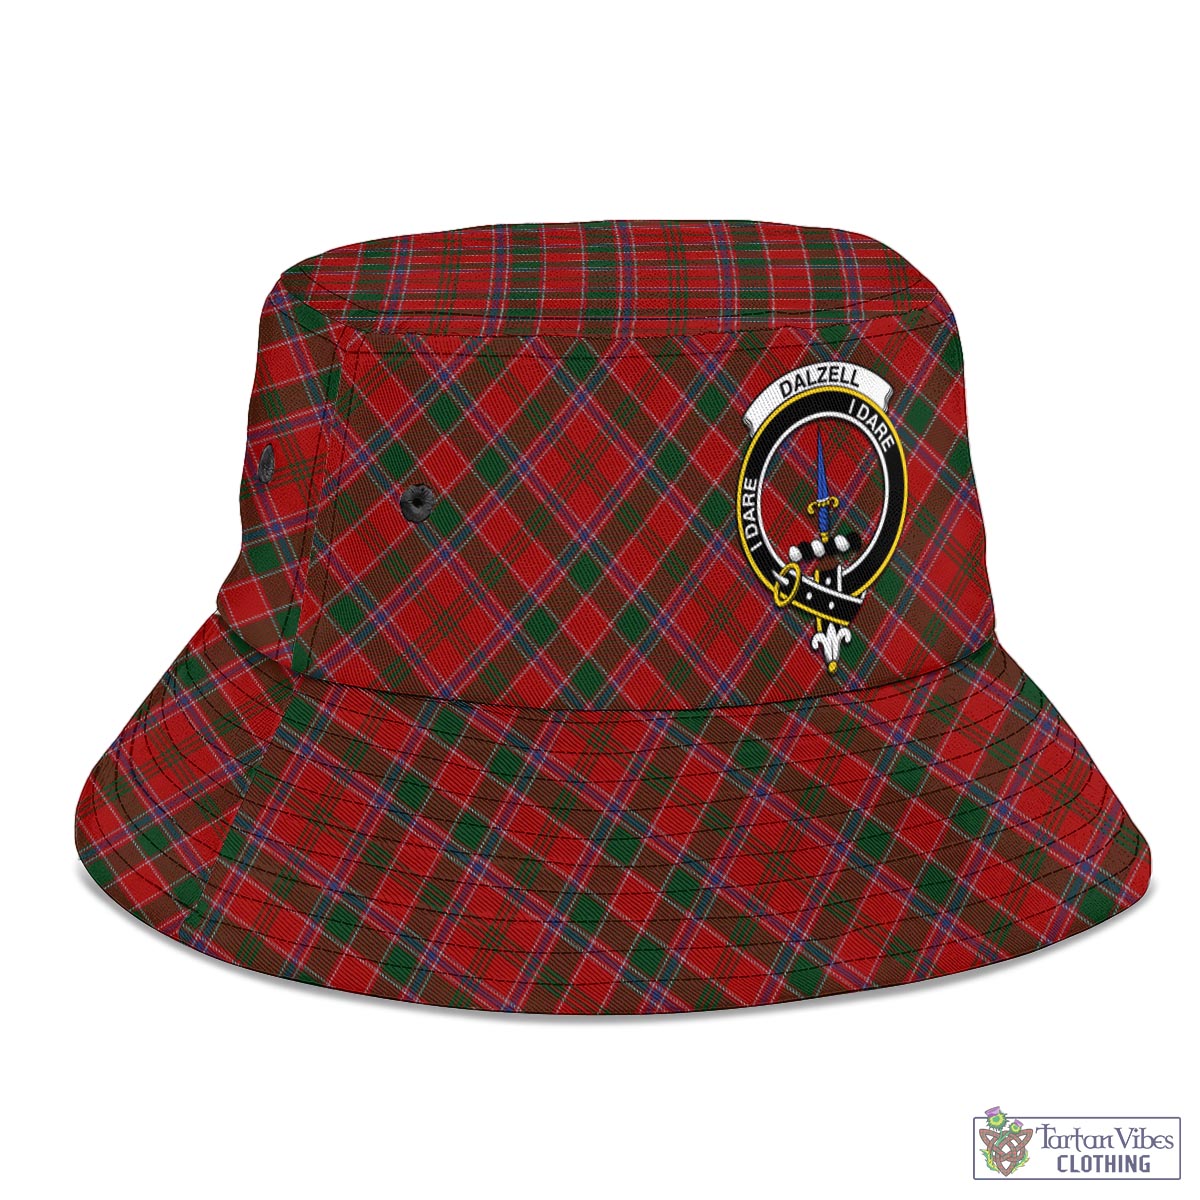 Tartan Vibes Clothing Dalzell (Dalziel) Tartan Bucket Hat with Family Crest